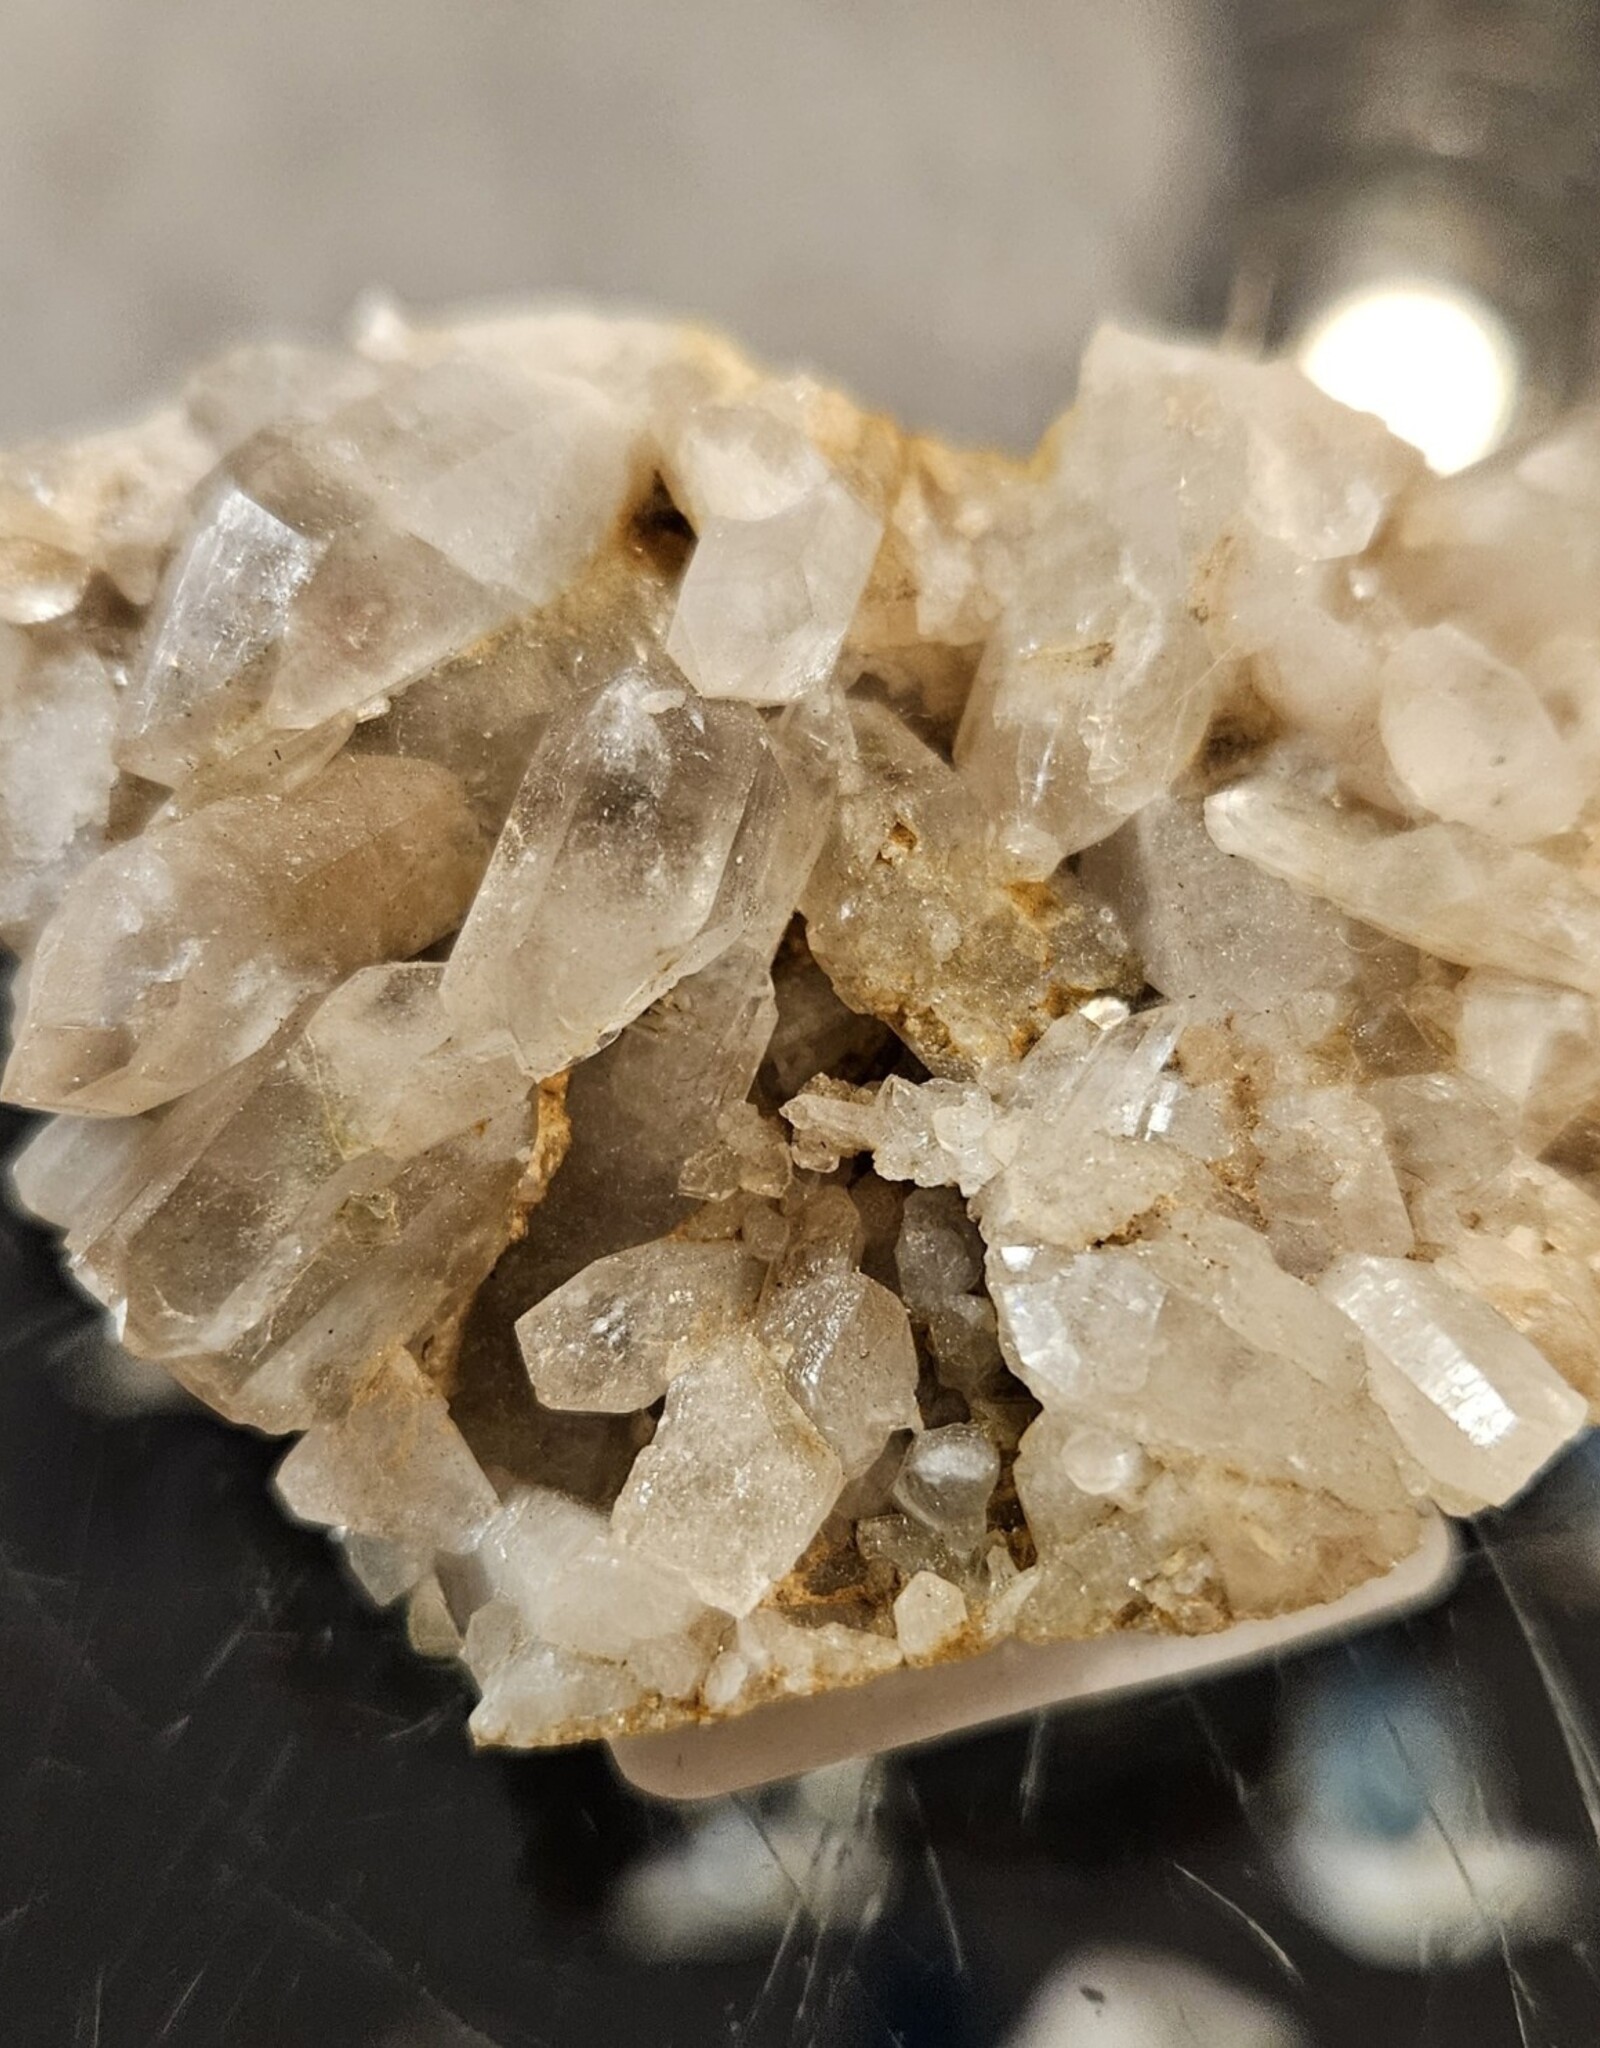 Smoky Quartz cluster with Hematite inclusions Small